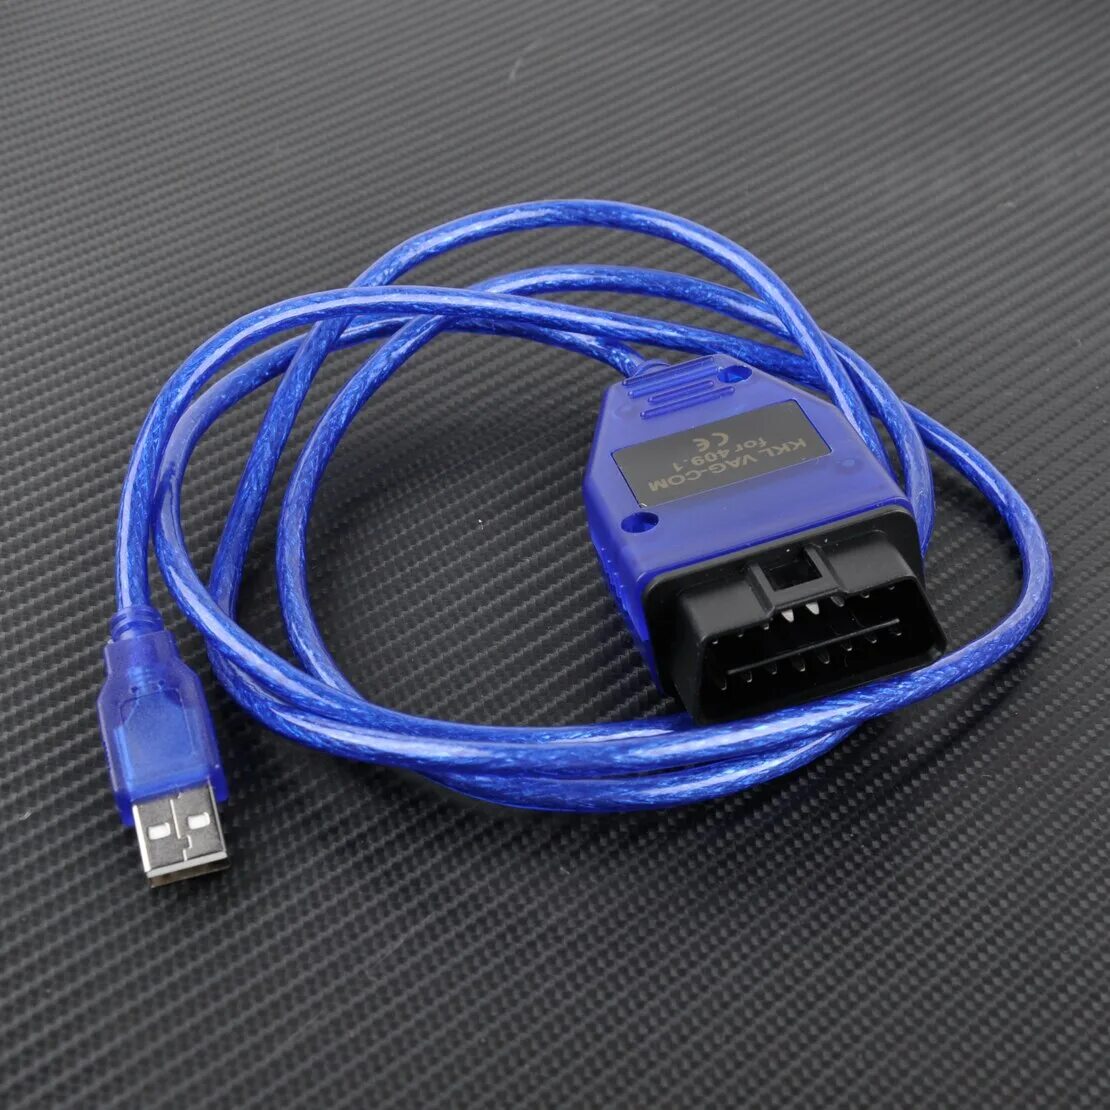 VAG com 409.1 KKL USB. Диагностический сканер ОБД 2 USB. KKL-USB адаптер Вася диагност 1.1. Вася диагност кабель VAG. Kkl 409.1 адаптер